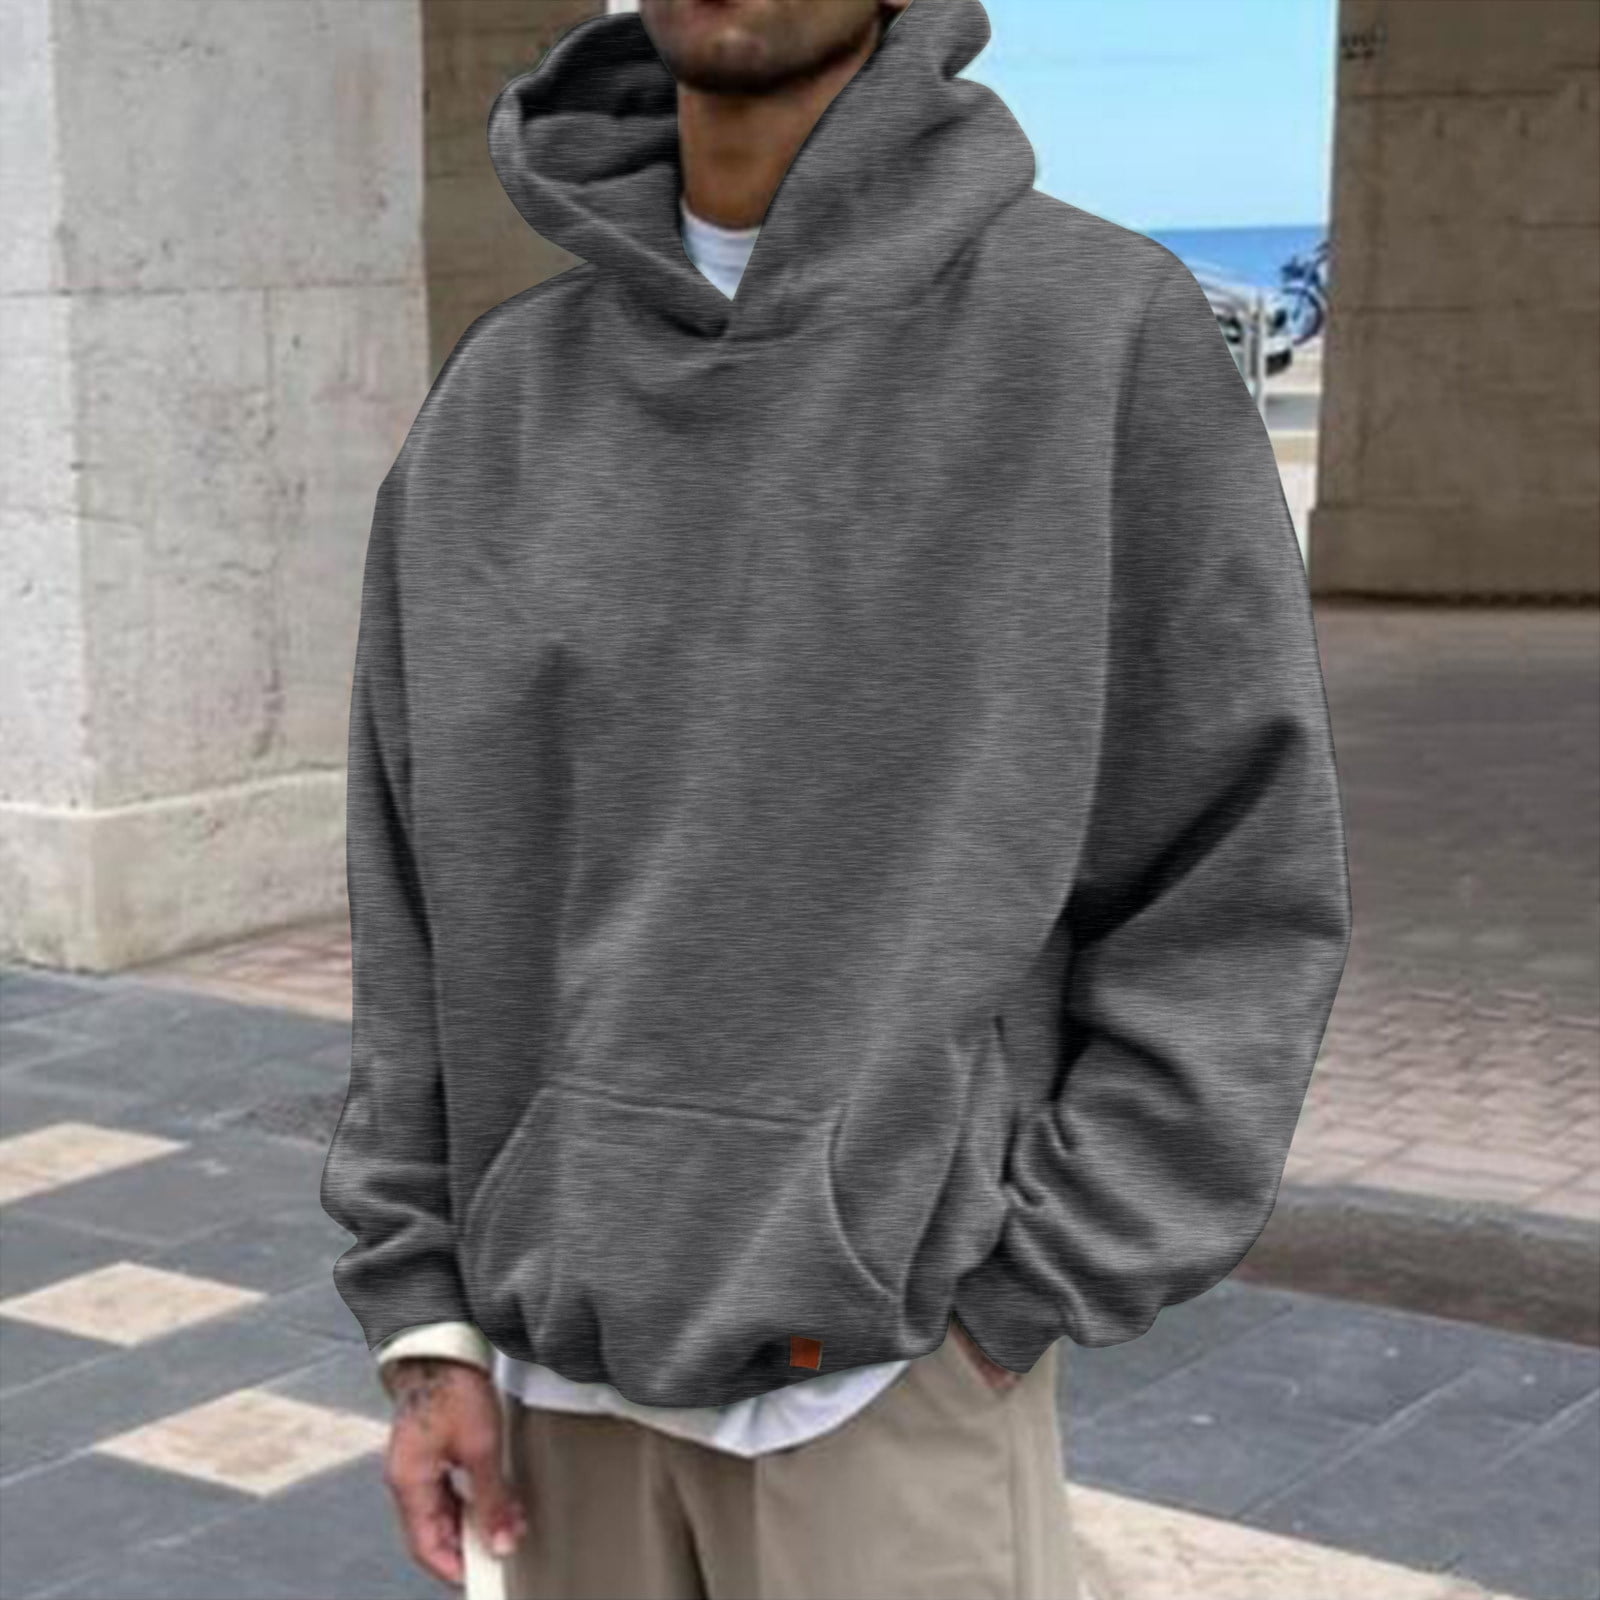 Renaissance Amfibisch Ambassadeur Gubotare Hoodies For Men Pullover Mens Full Zip Hoodies Lightweight Hoodie  Warm Long Sleeves Sweatshirt Coat Jacket Sweater Hoodies Bundle,Dark Gray  XXL - Walmart.com